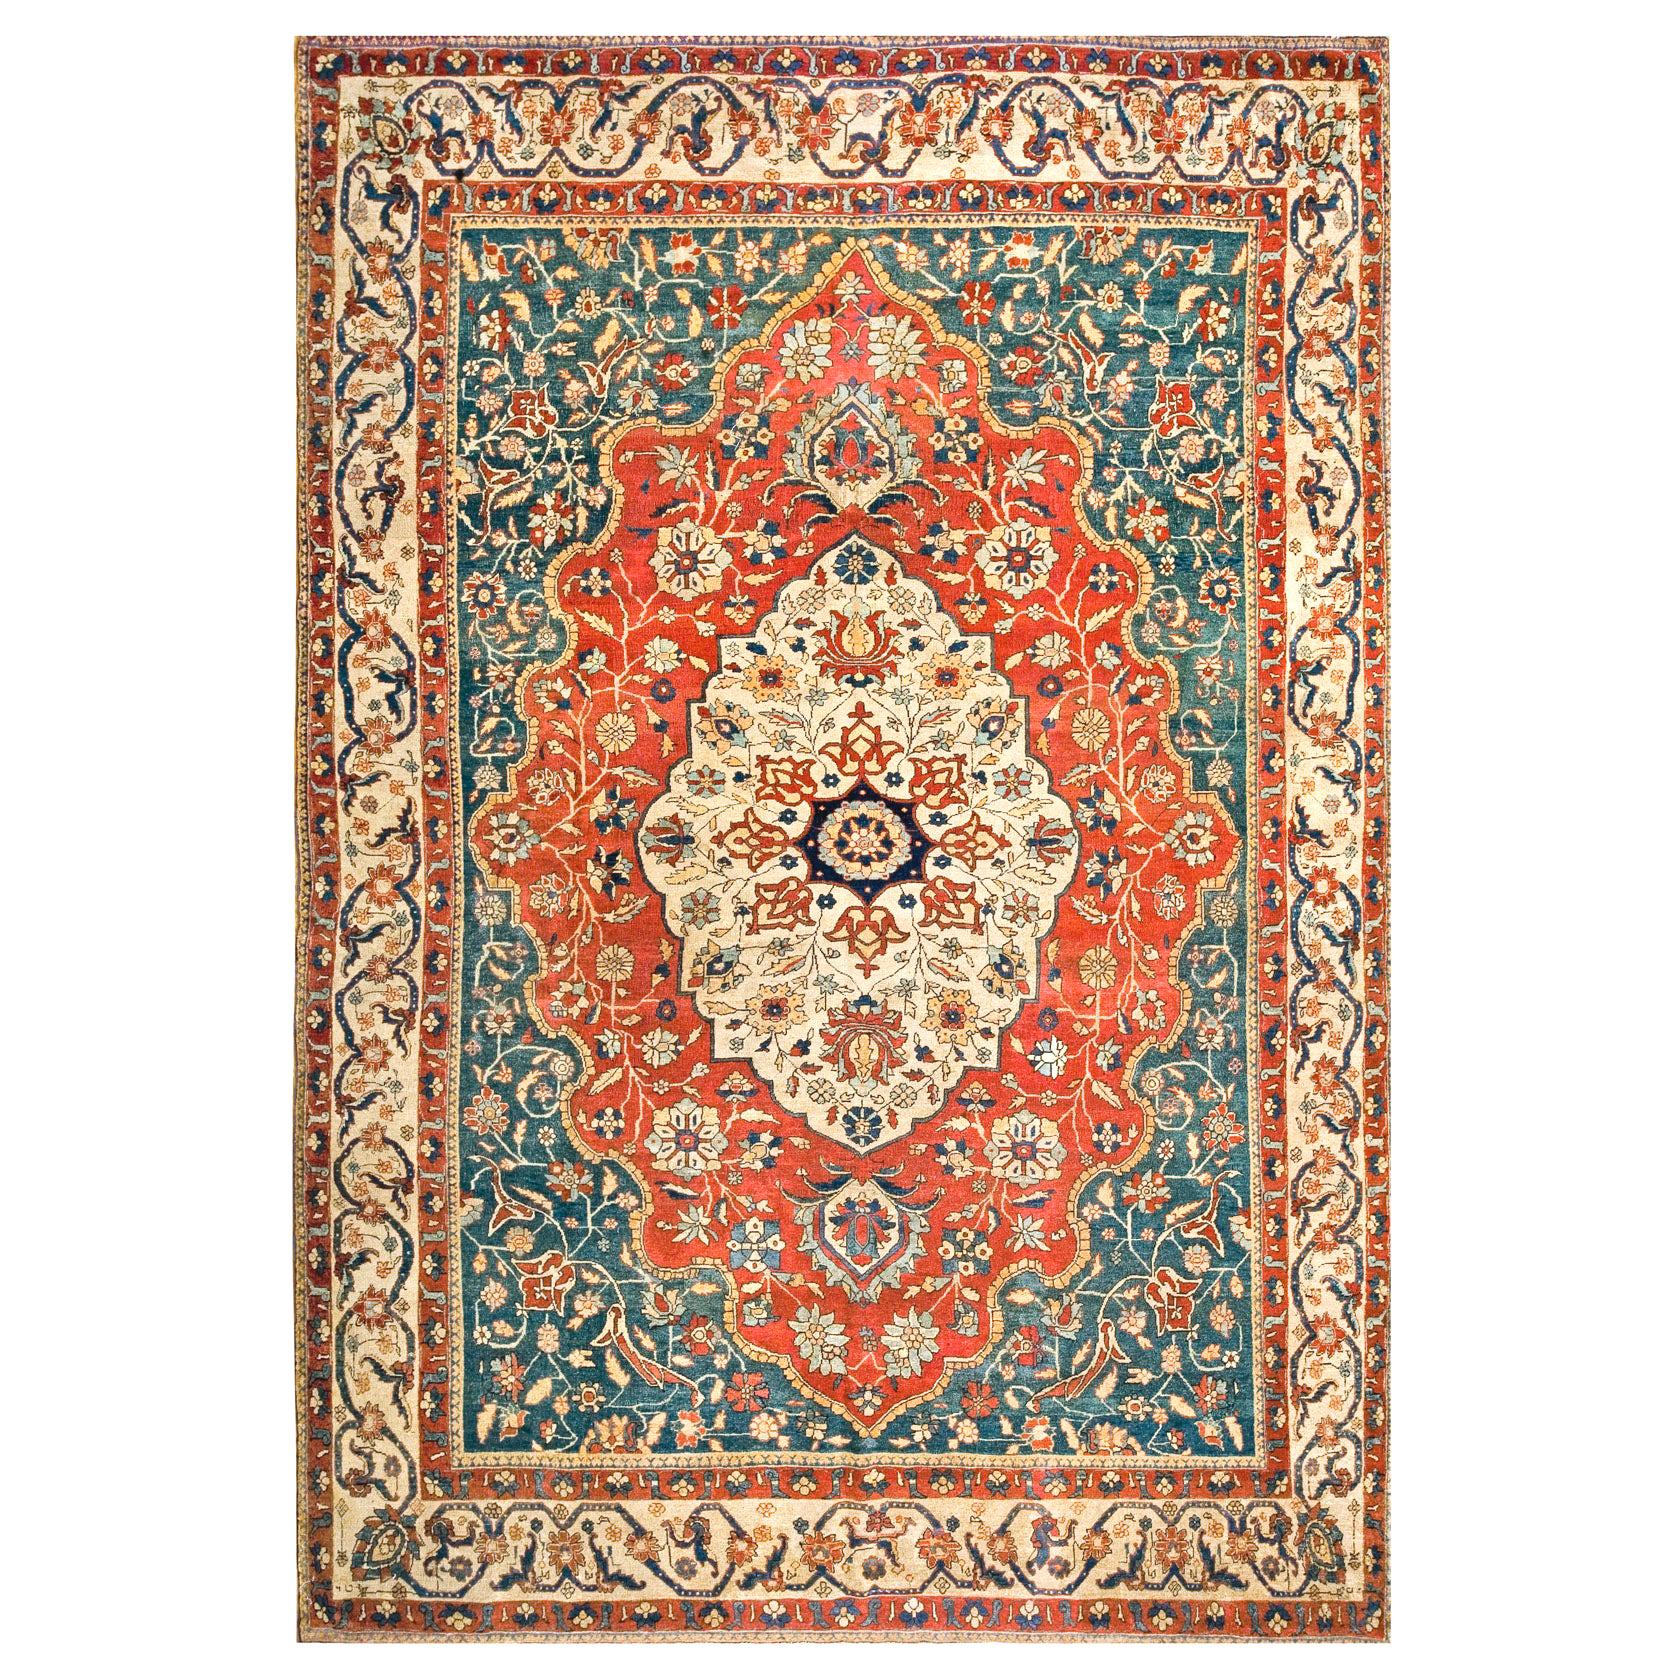 19th Century Persian Sarouk Farahan Carpet ( 7'2" x 10'6" - 218 x 320 cm )